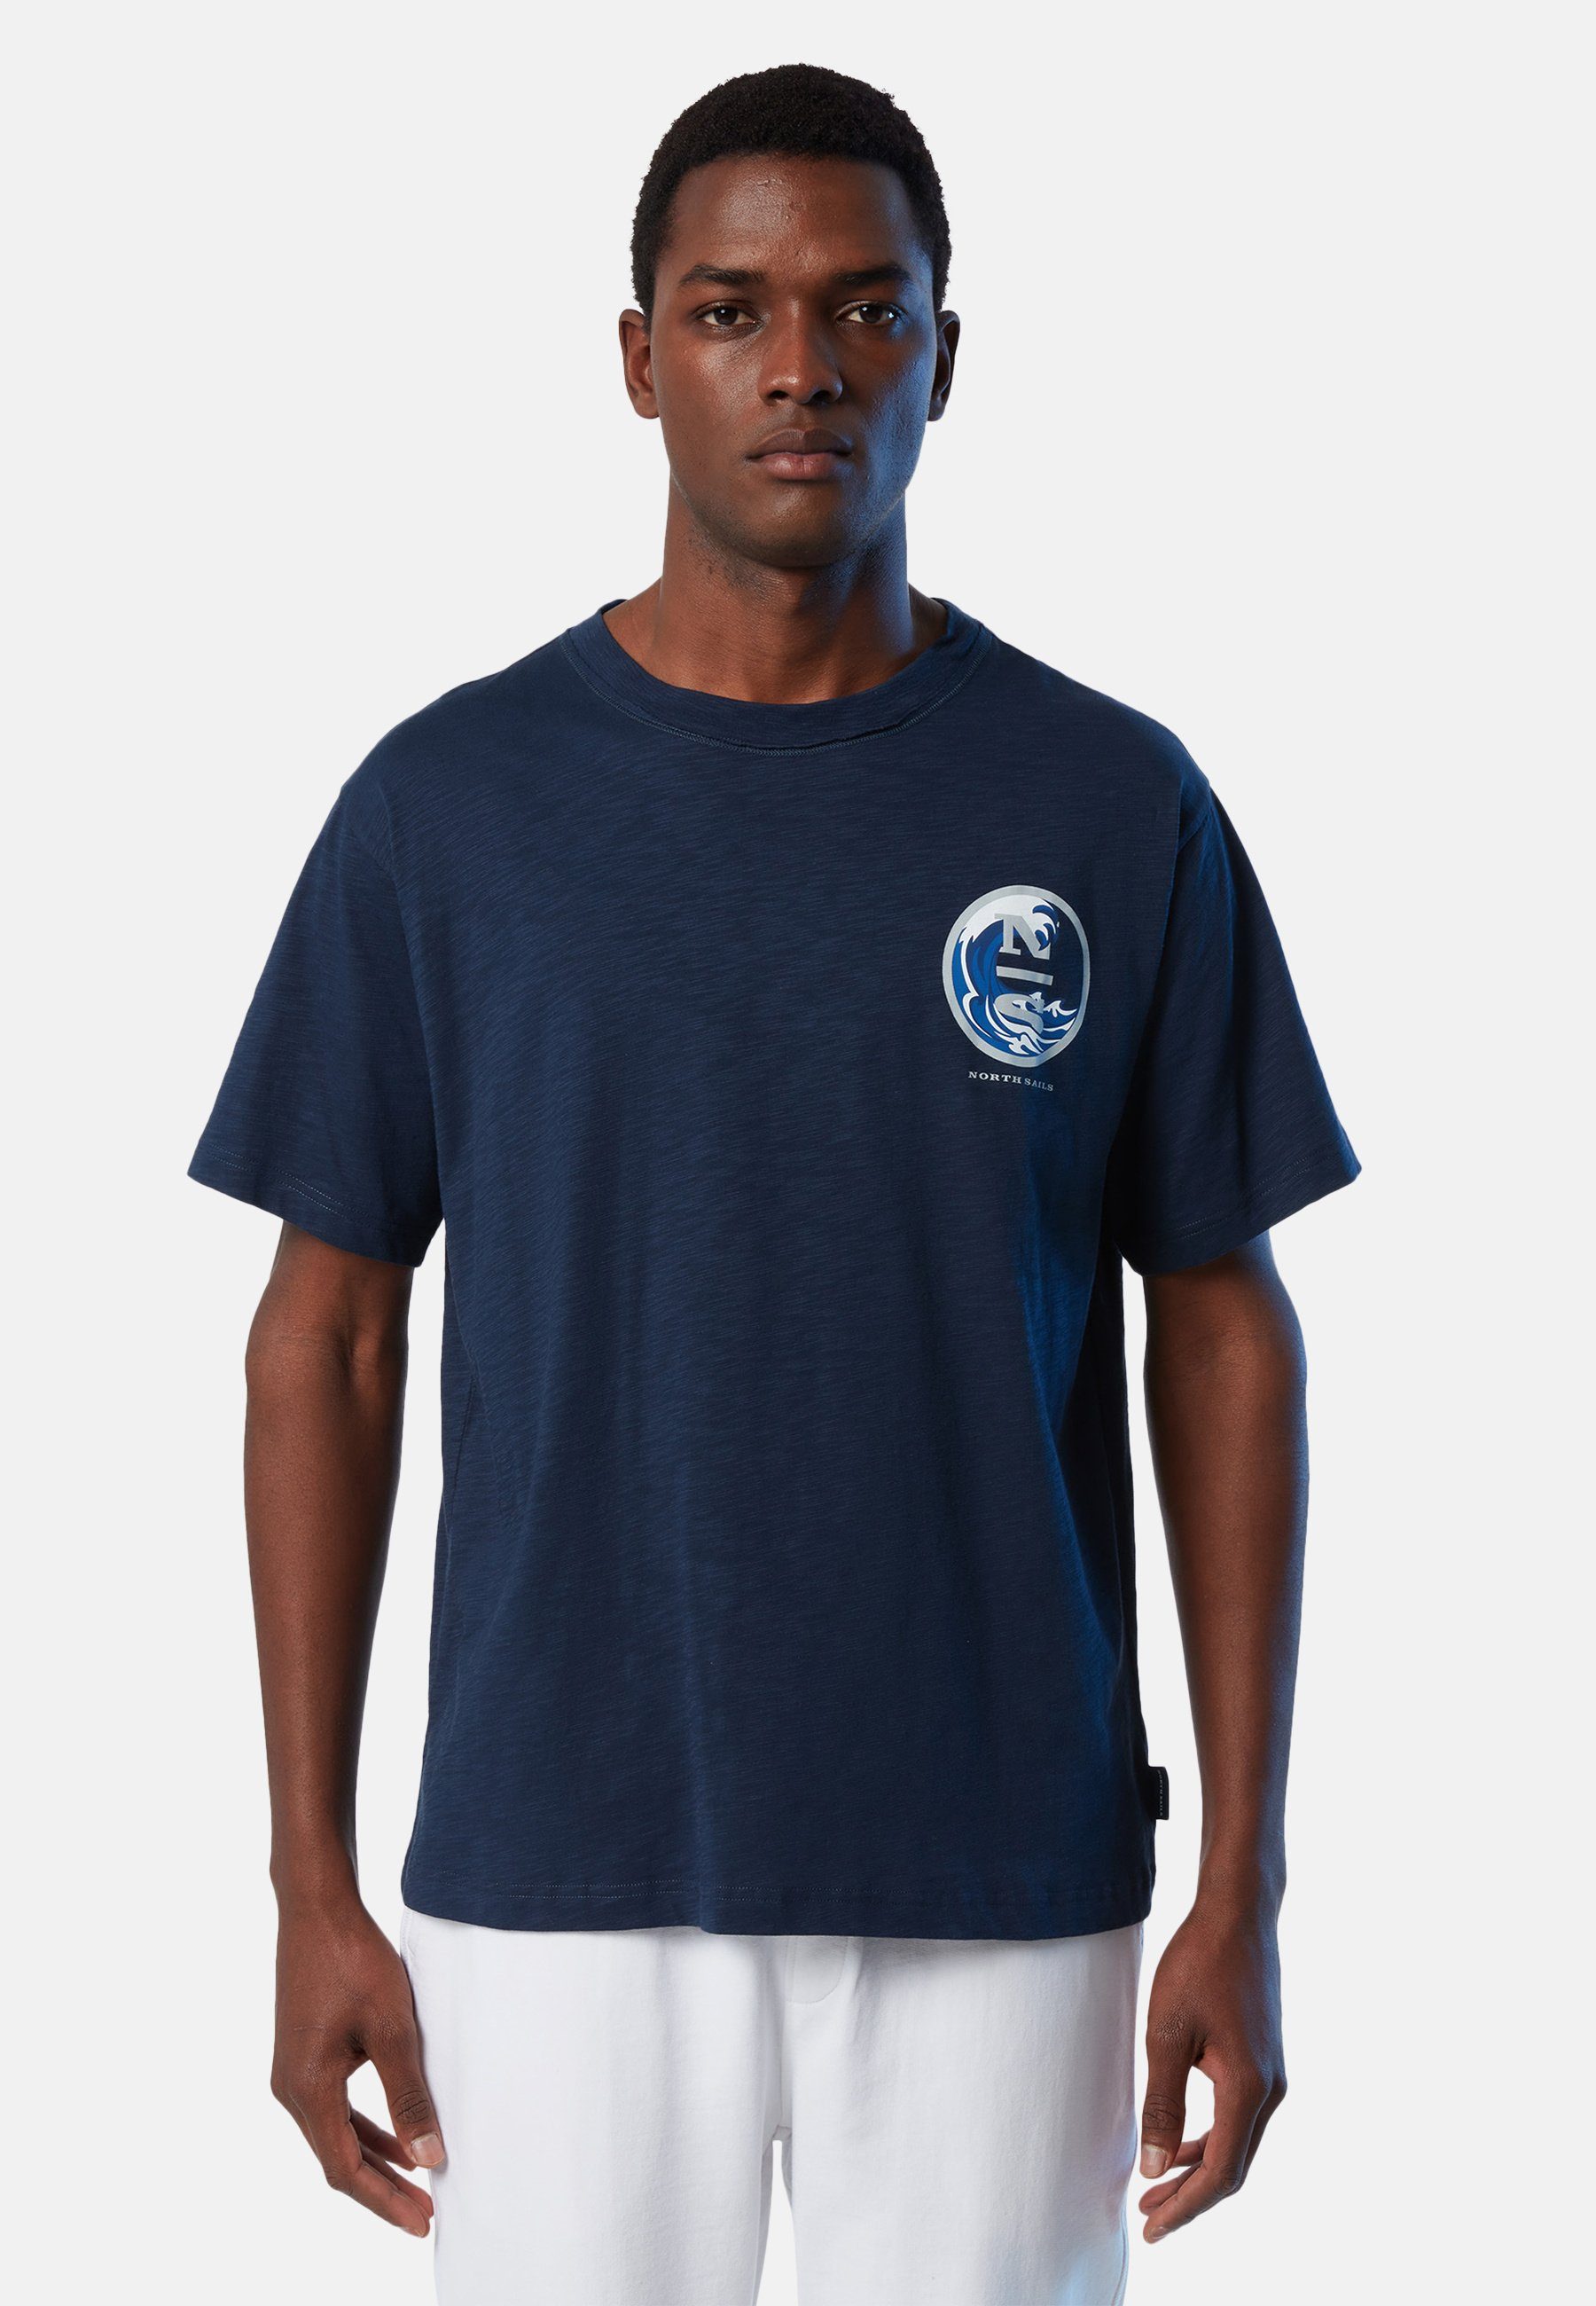 T-Shirt Sails BLUE Grafikdruck Sonstiges North mit T-Shirt